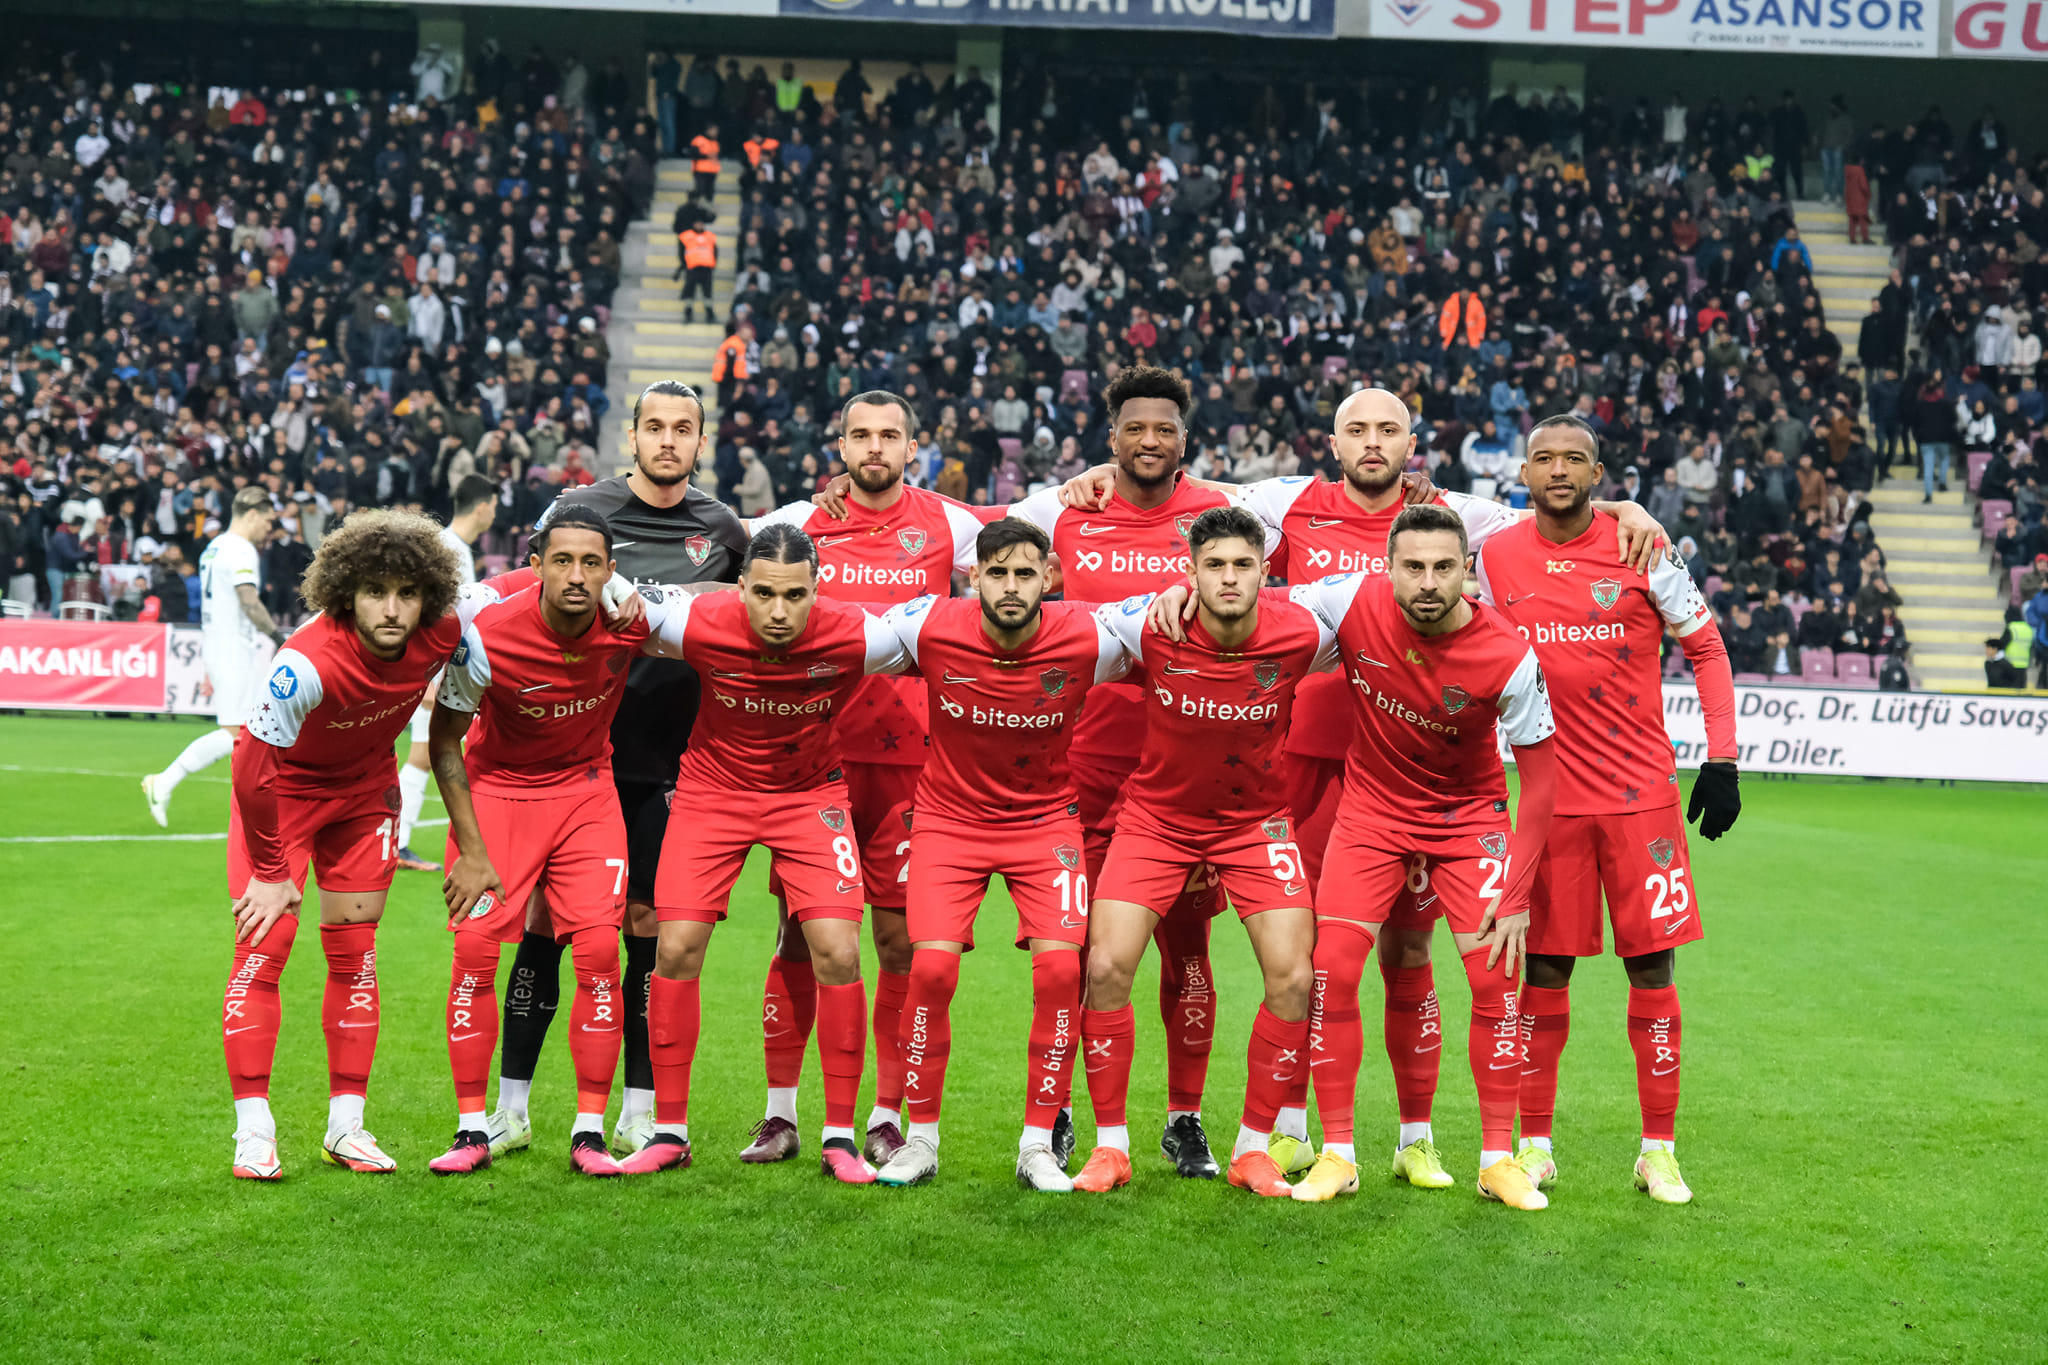 Hatayspor oficializou desistência do Campeonato Turco